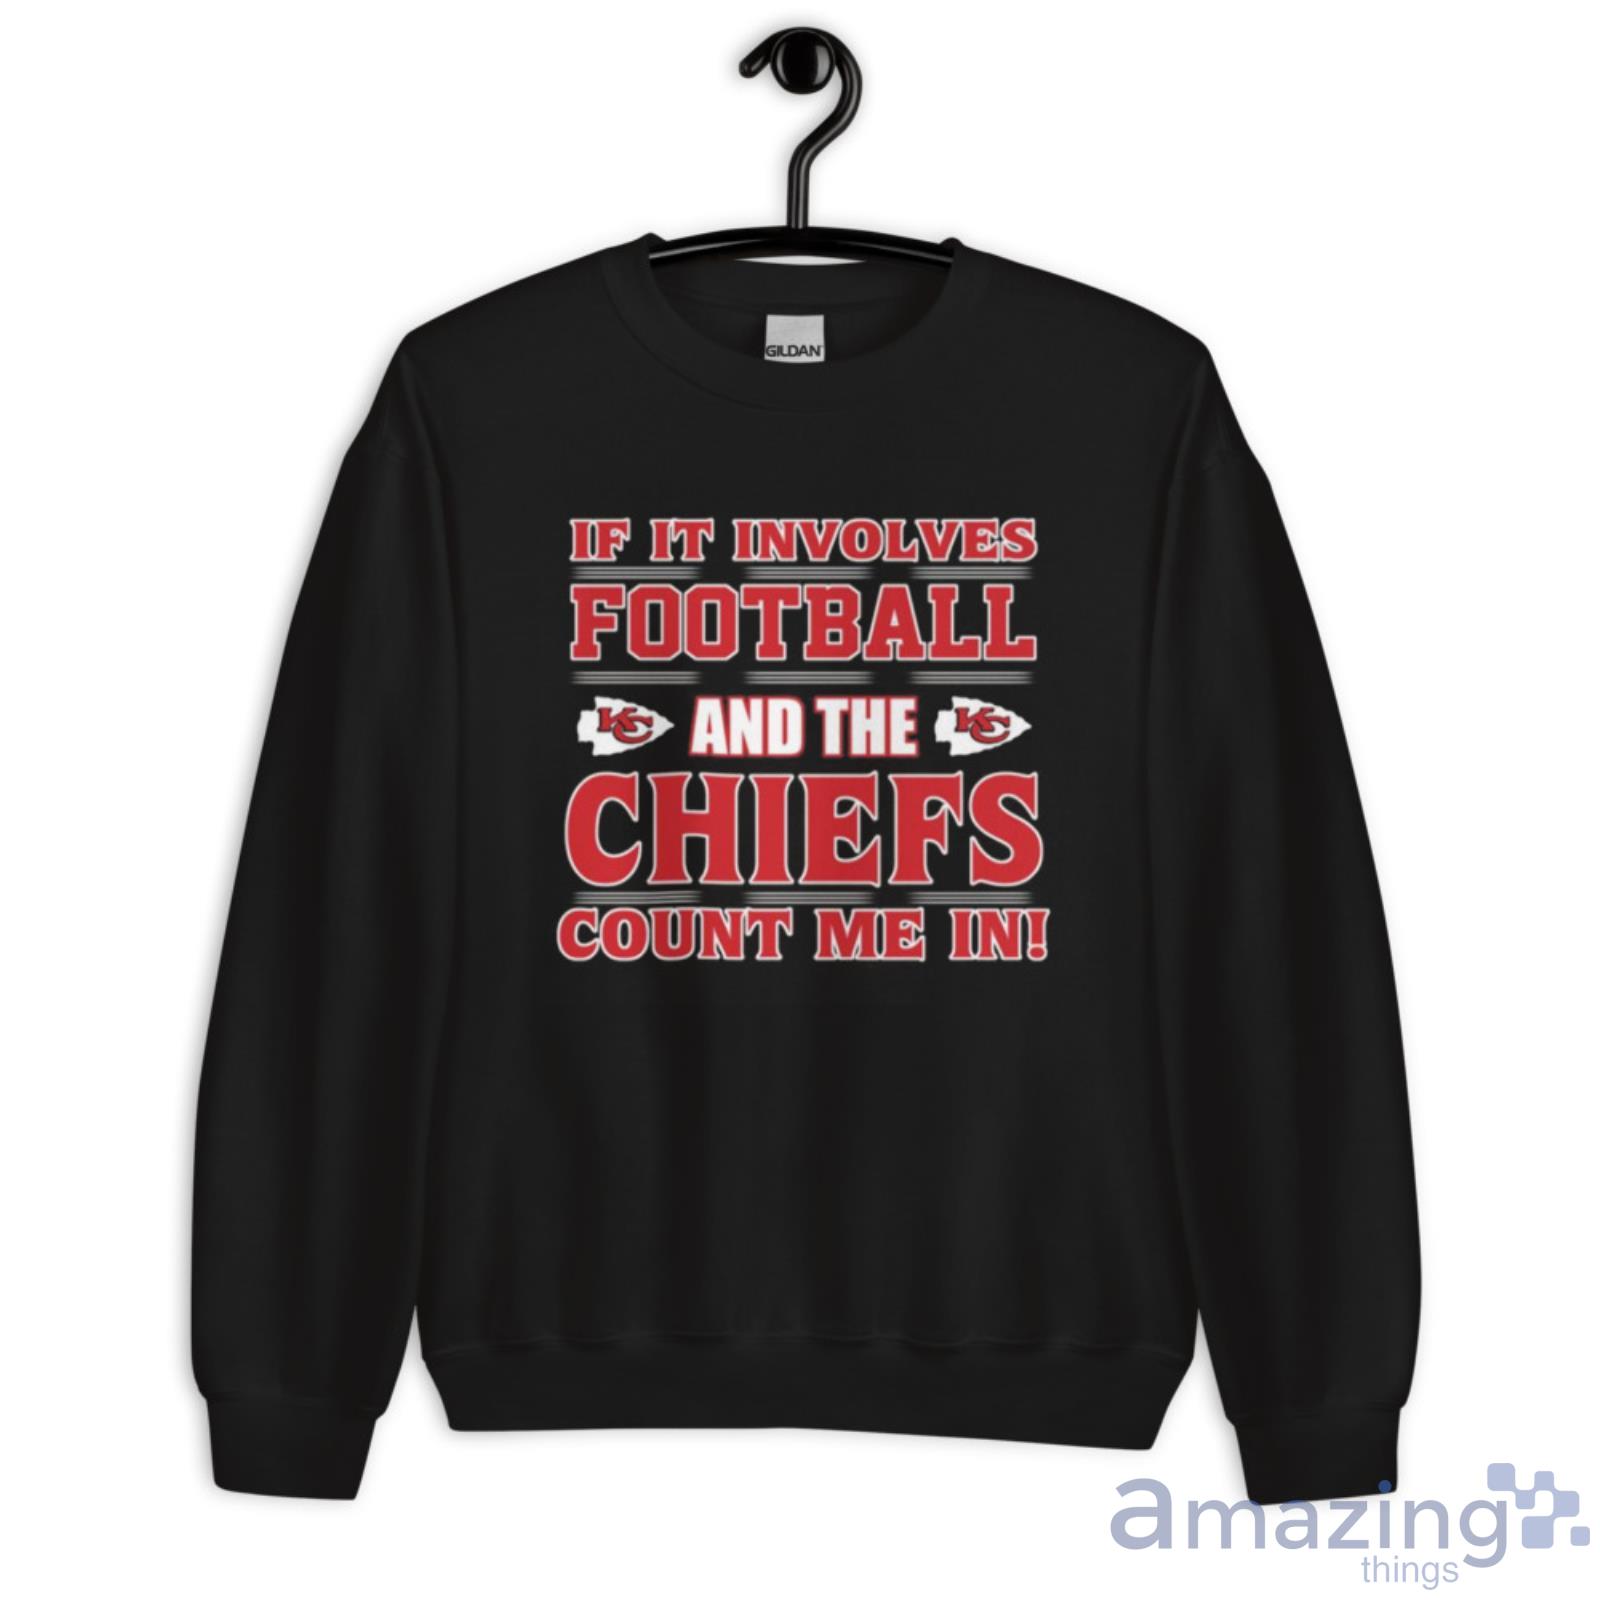 chiefs sweatshirt near me